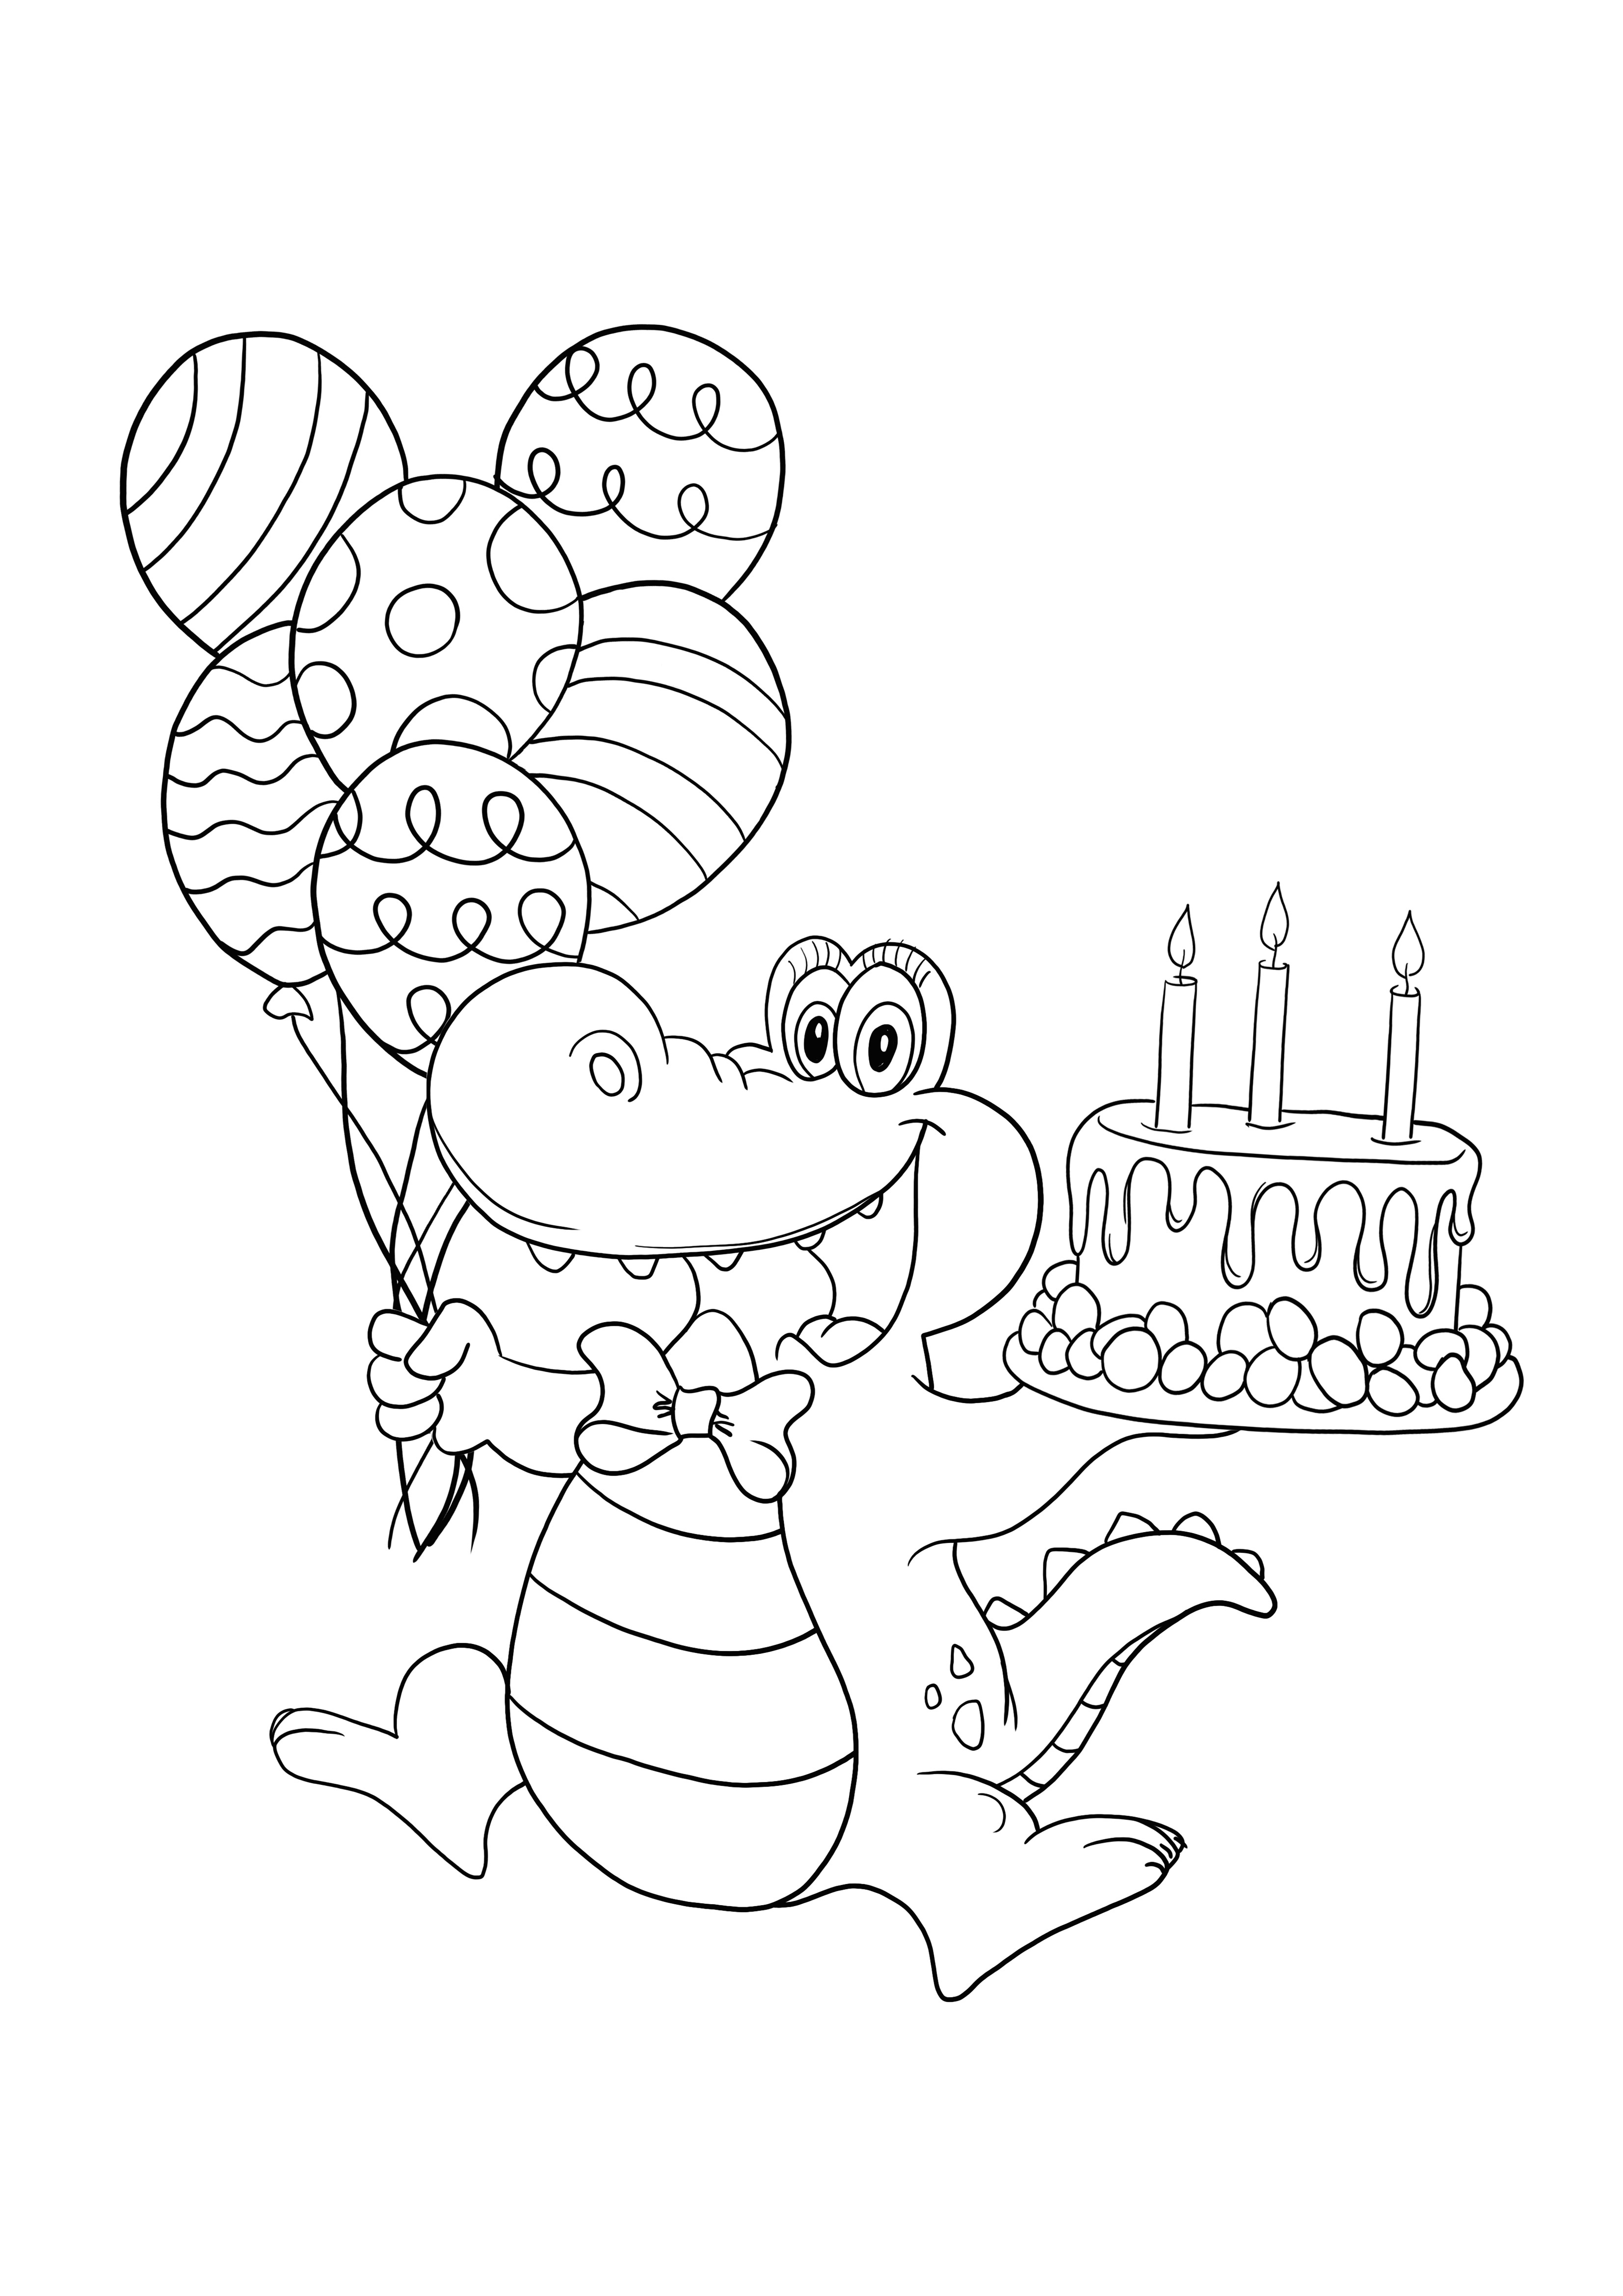 Feliz aniversário crocodilo para imprimir de graça e colorir